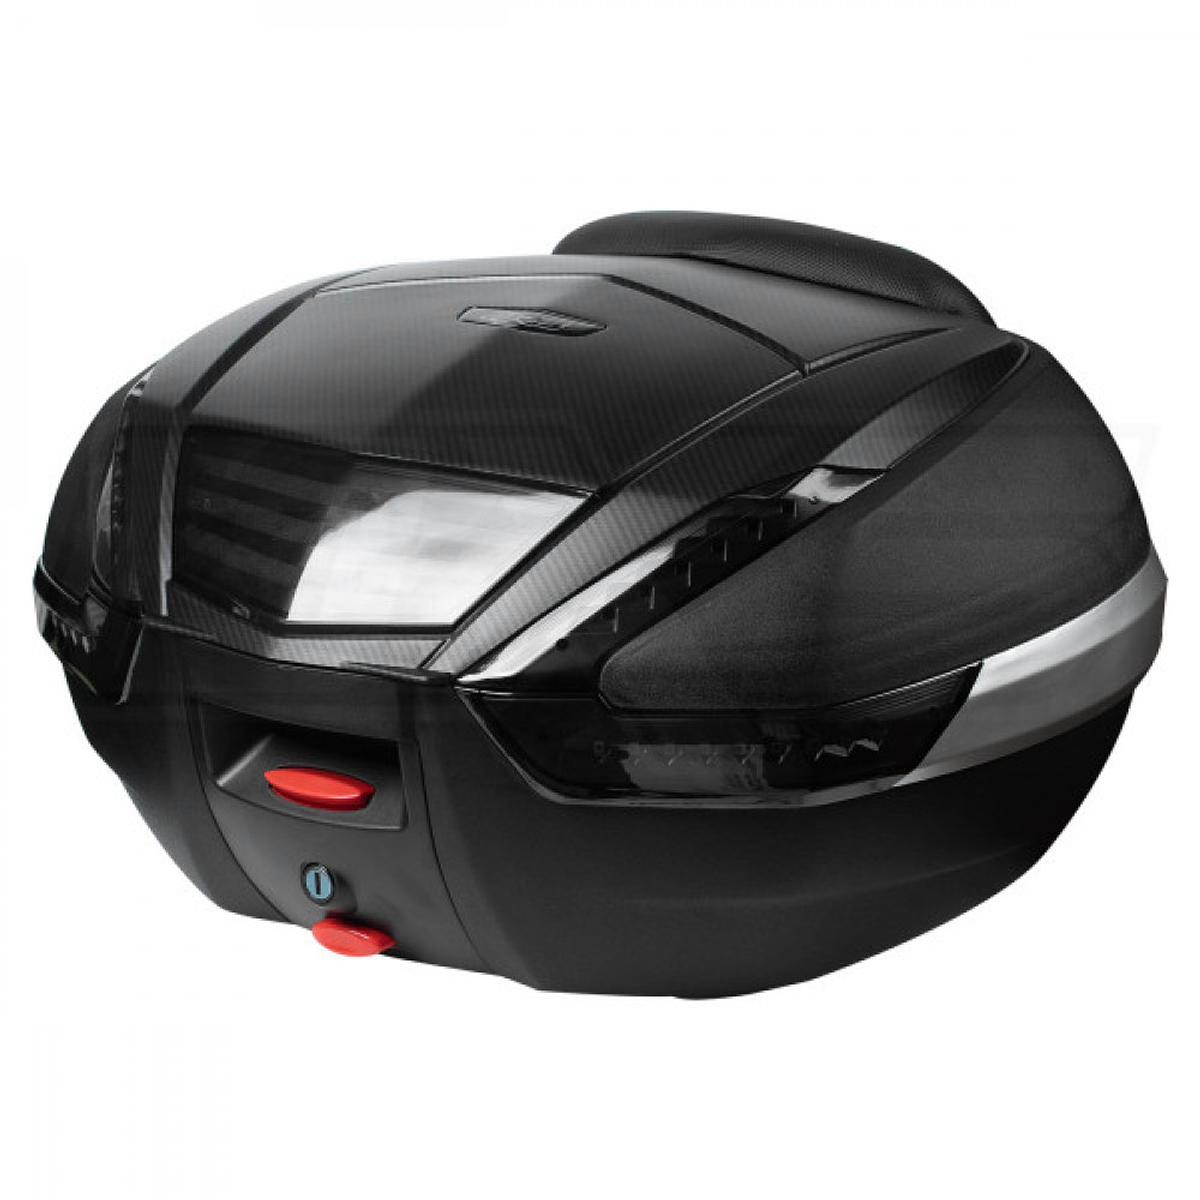 Maleta Top Case Moto Aluminio Negro 4rs E70 45 Litros Turismo Trail  Desmontable